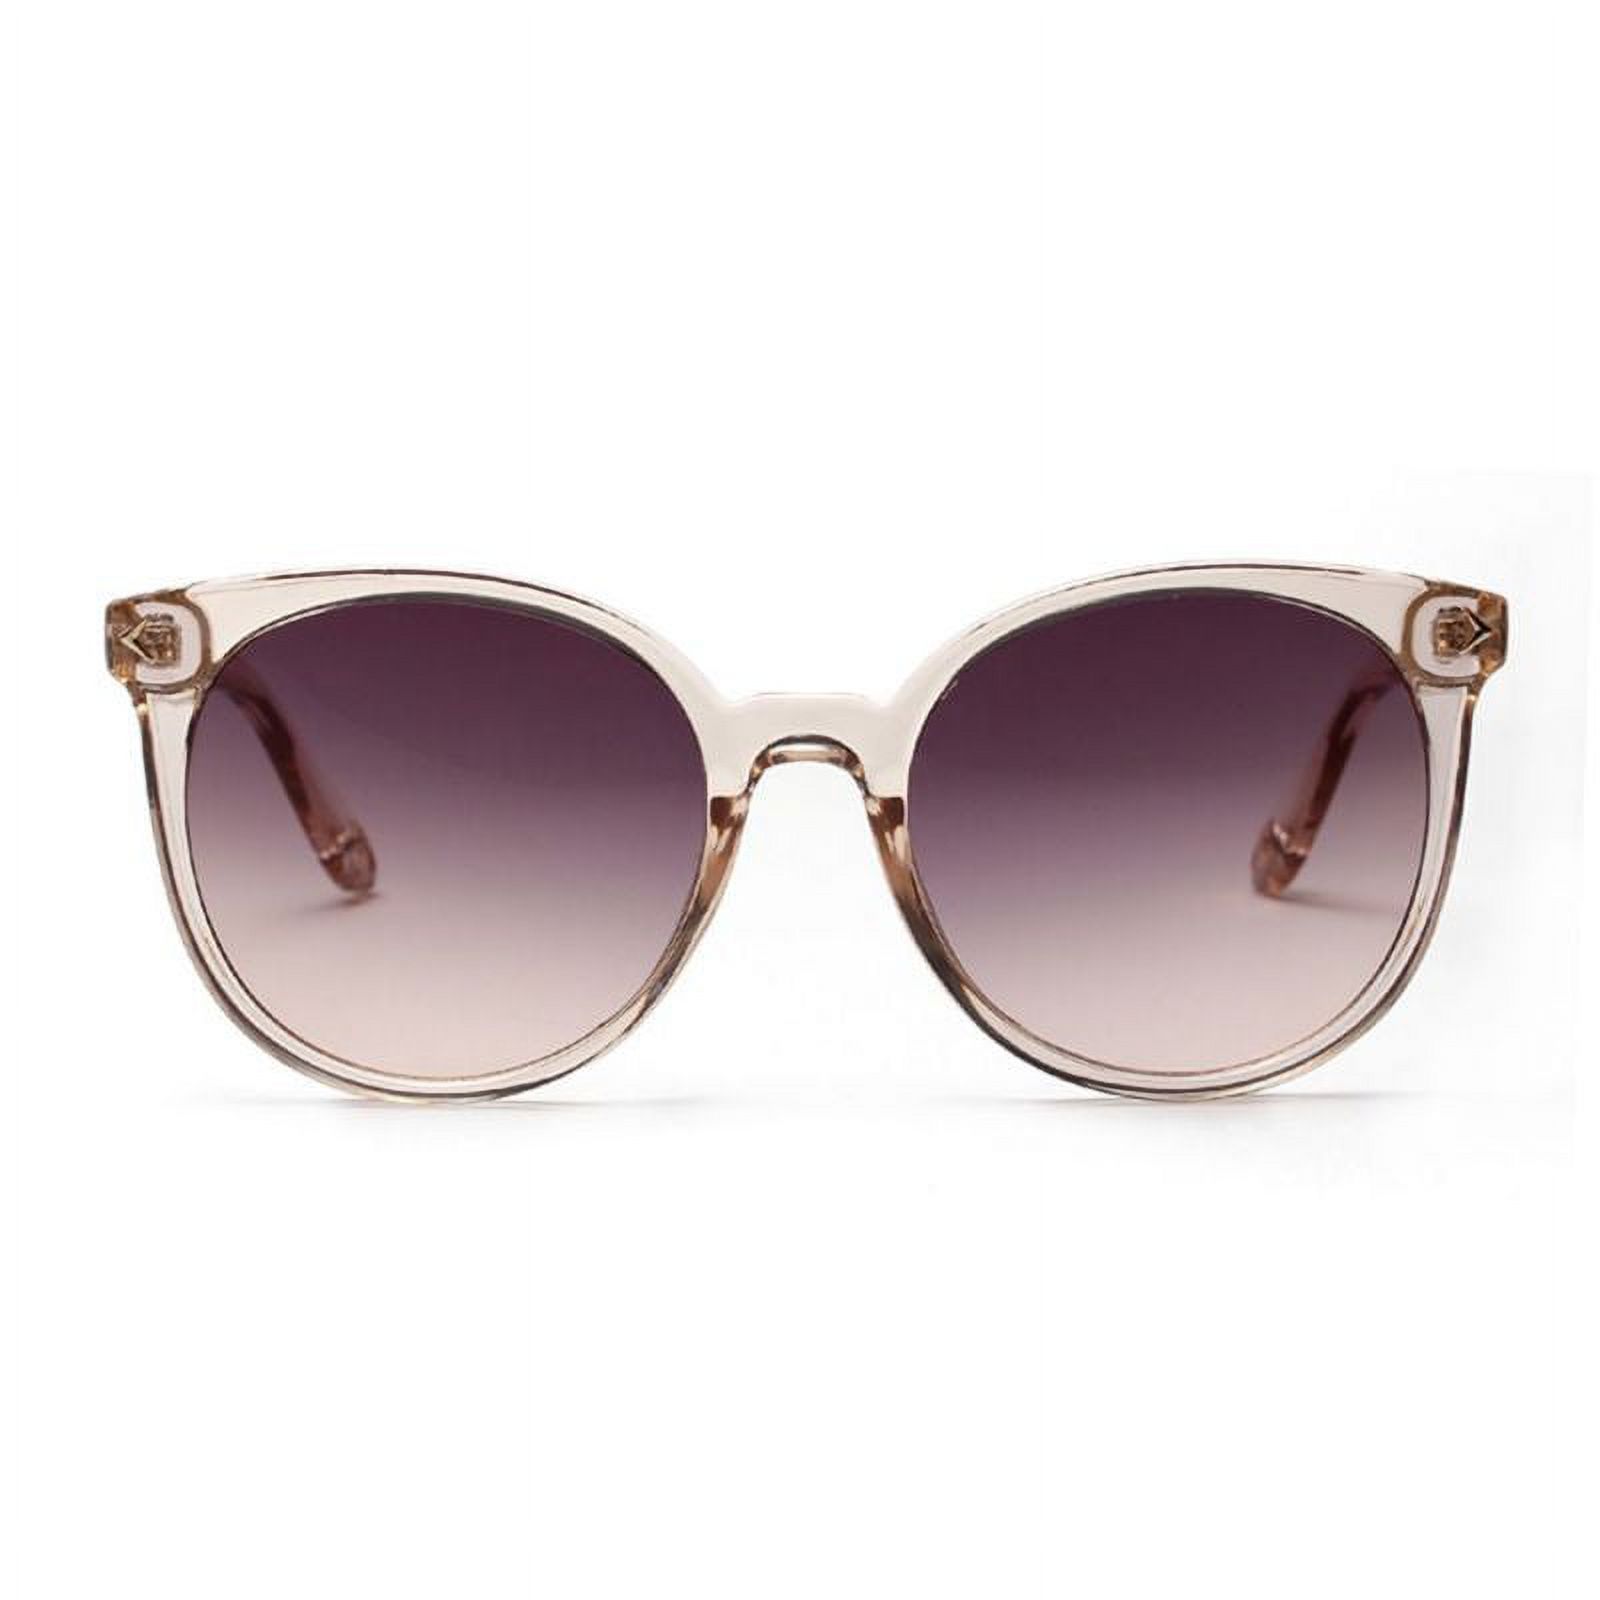 Retro Round Transparent Frame Sunglasses Women Men Brand Designer Sun Glasses for Women Alloy Mirror,Coffee - image 3 of 3